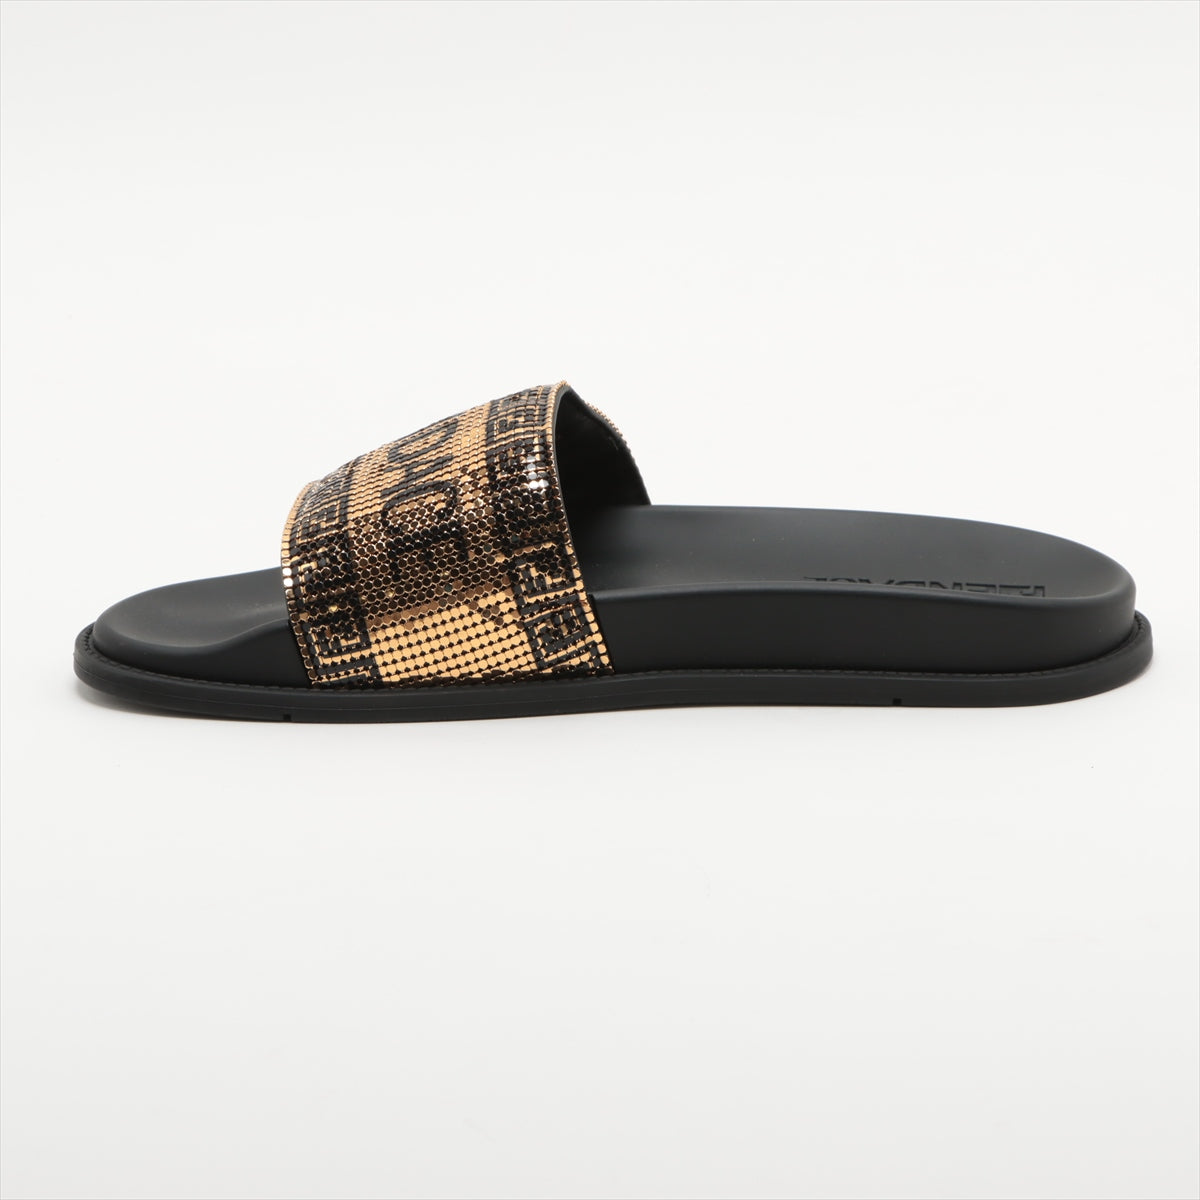 Fendi x Versace Rubber Sandals 9 Men's gold×black Fender Choi box There is a bag